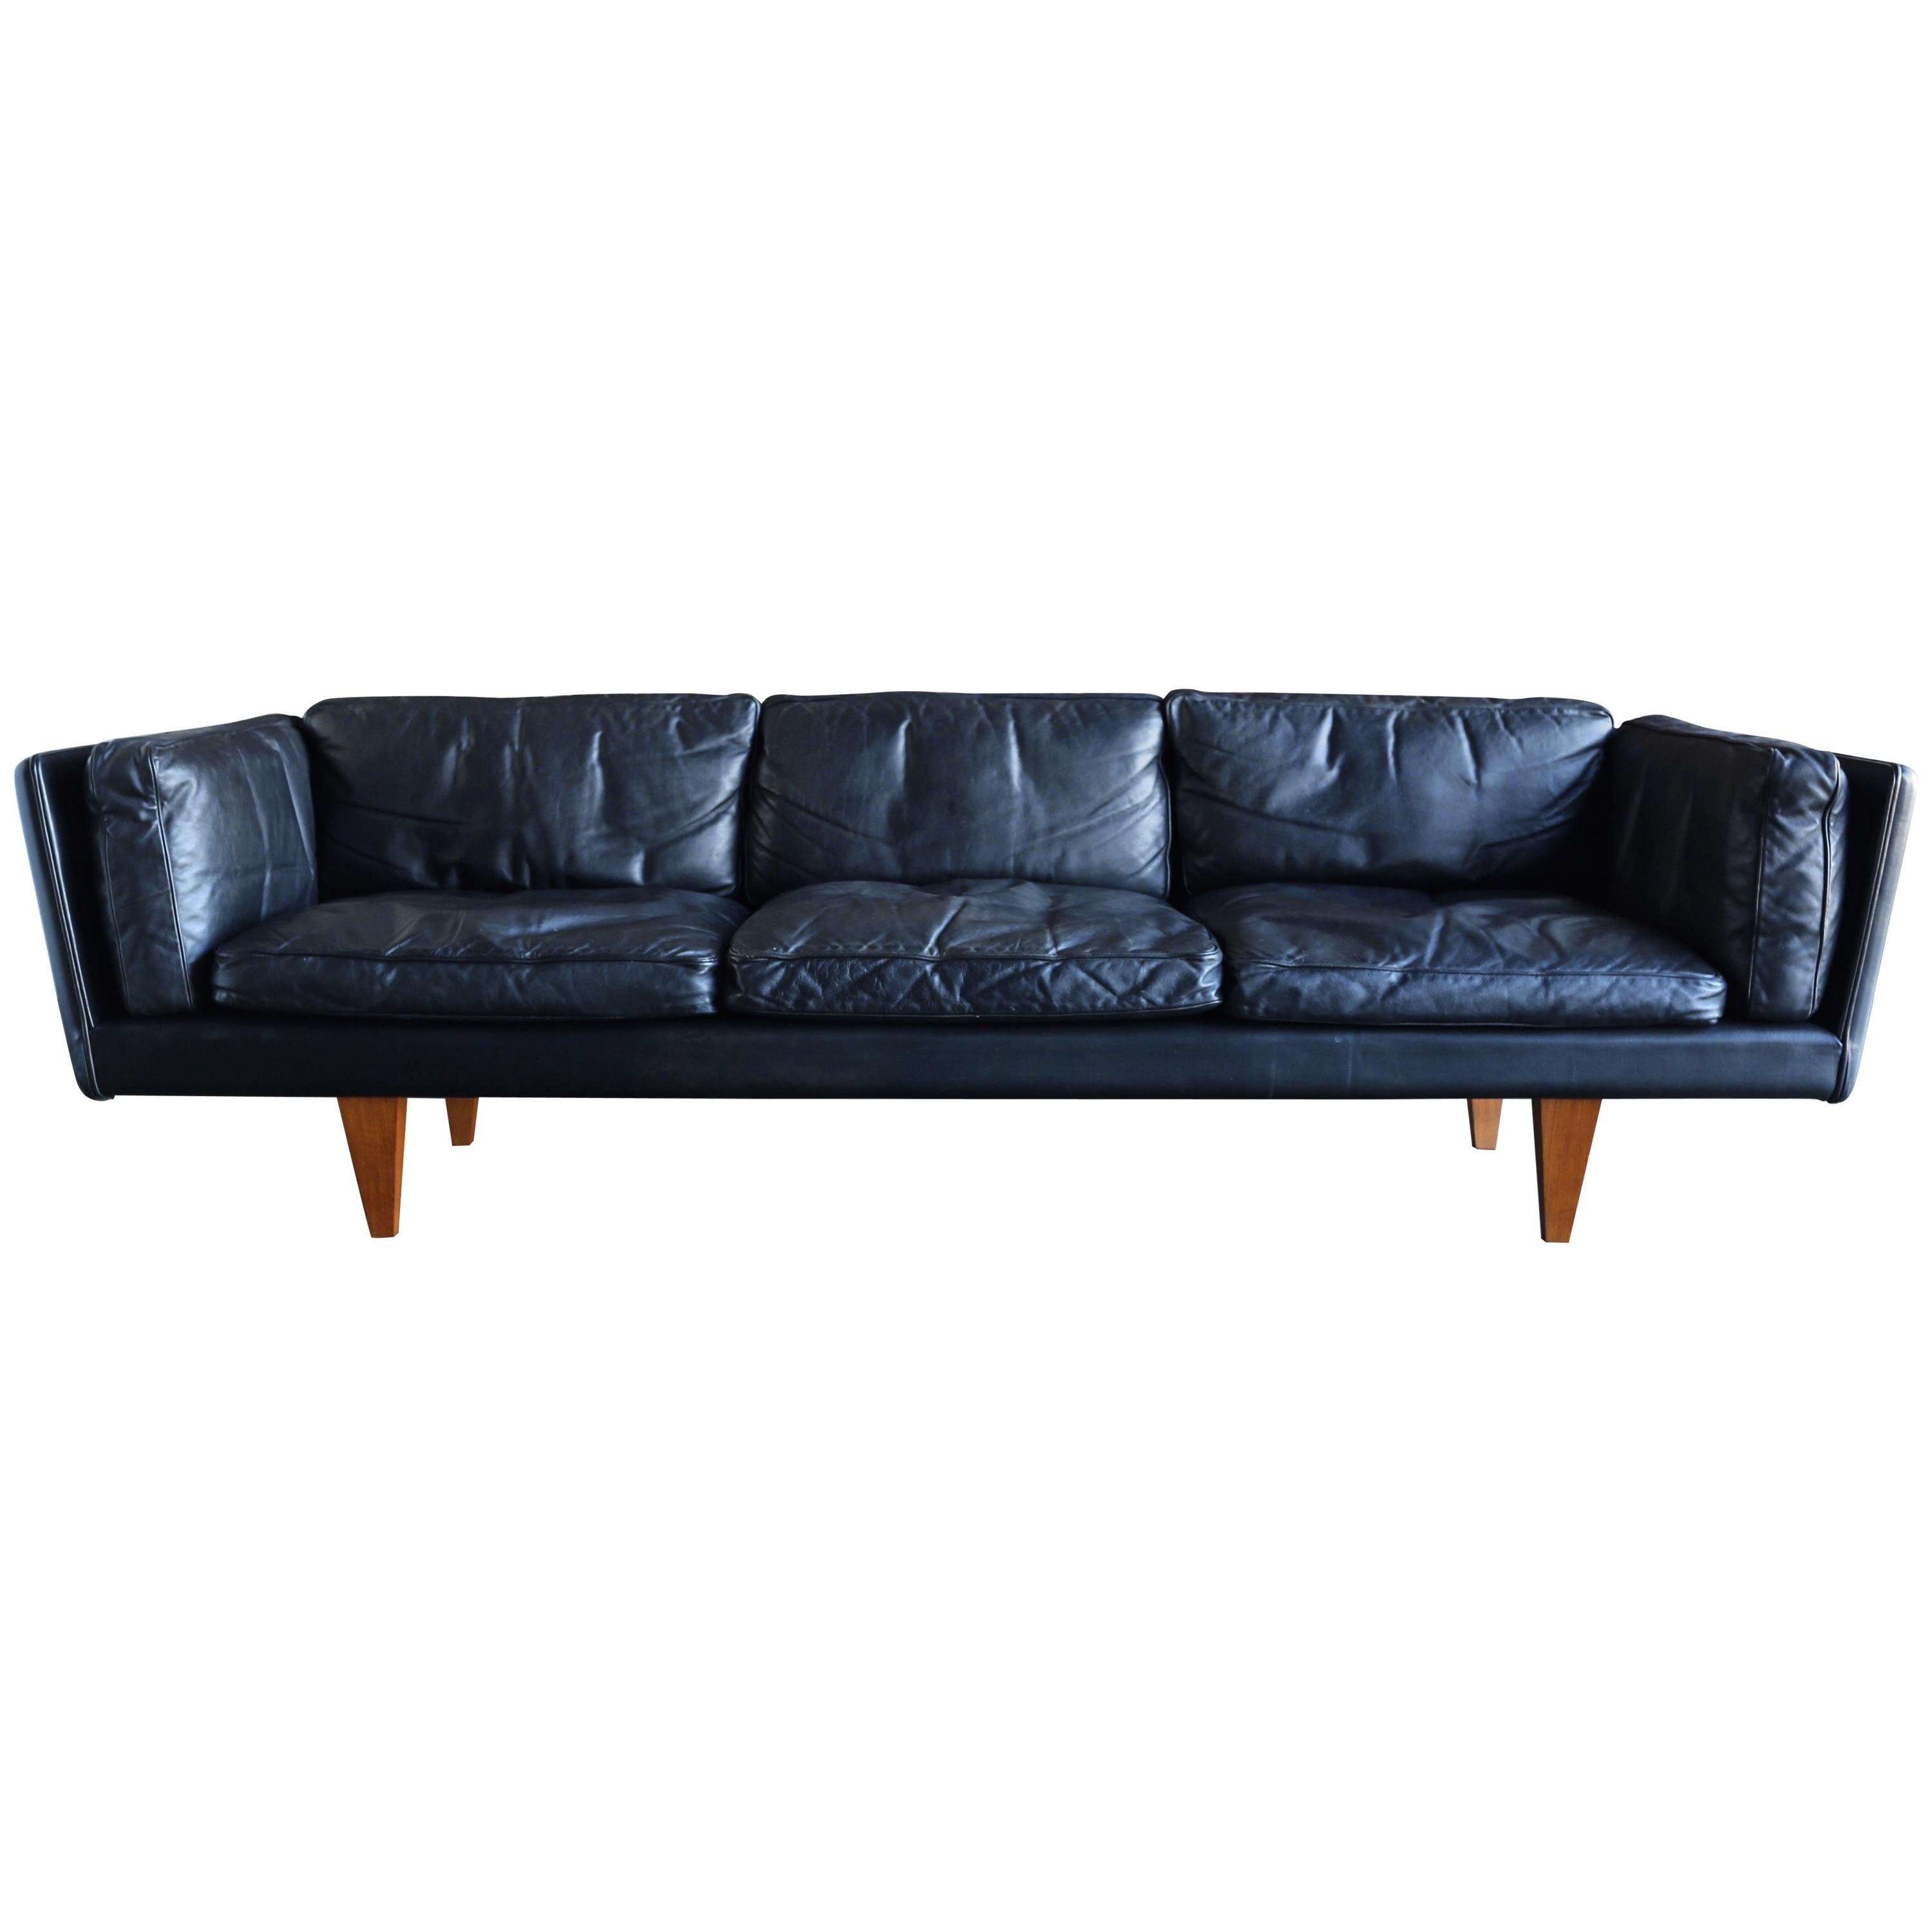 Original Black Leather Sofa by Illum Wikkelsø